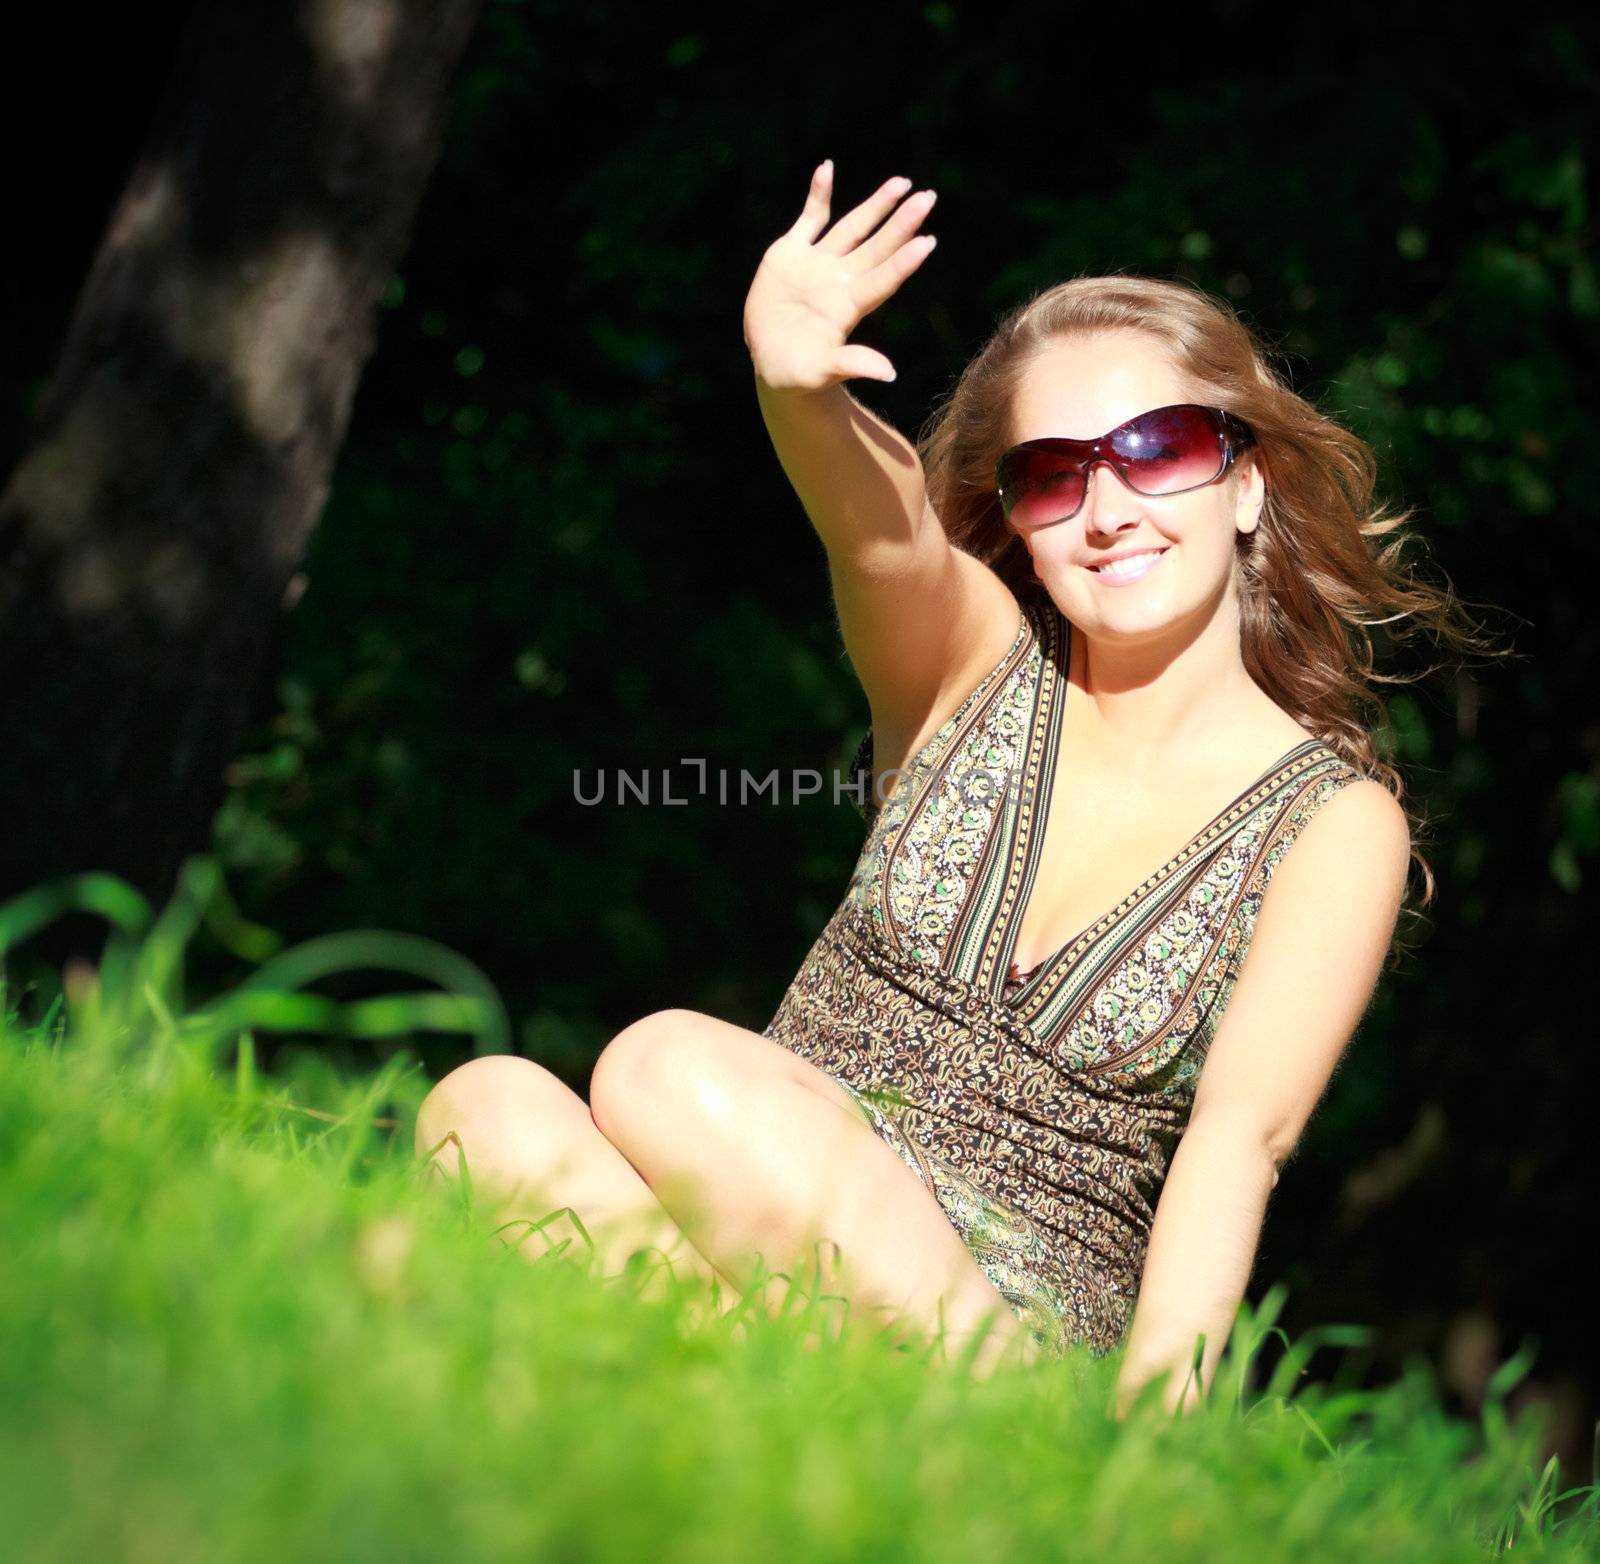 beautiful girl in sunglasses sitting in grass